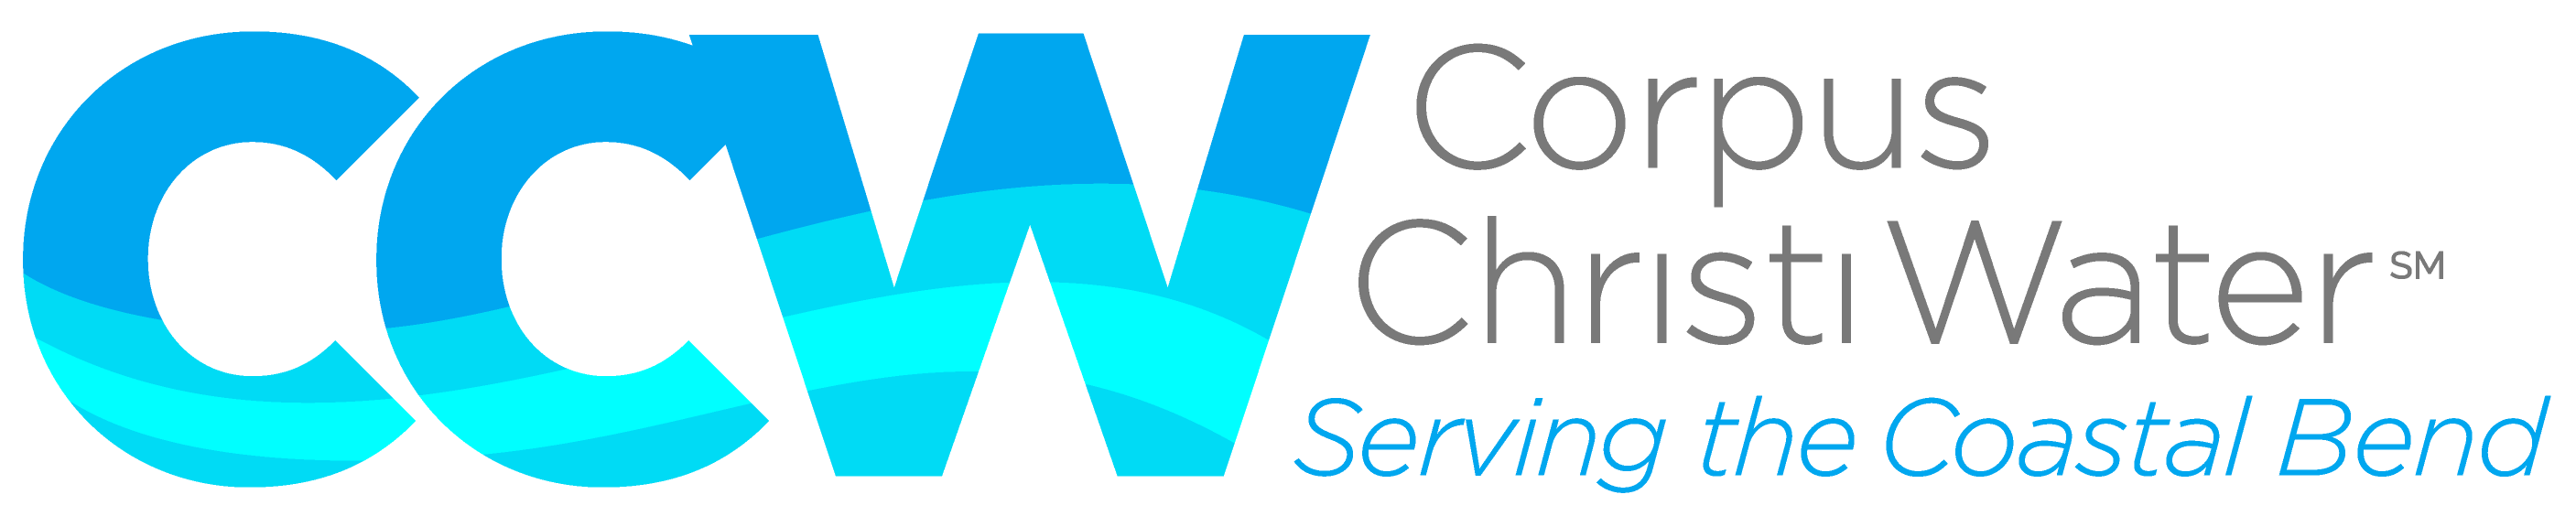 Corpus Christi Water Official Logo